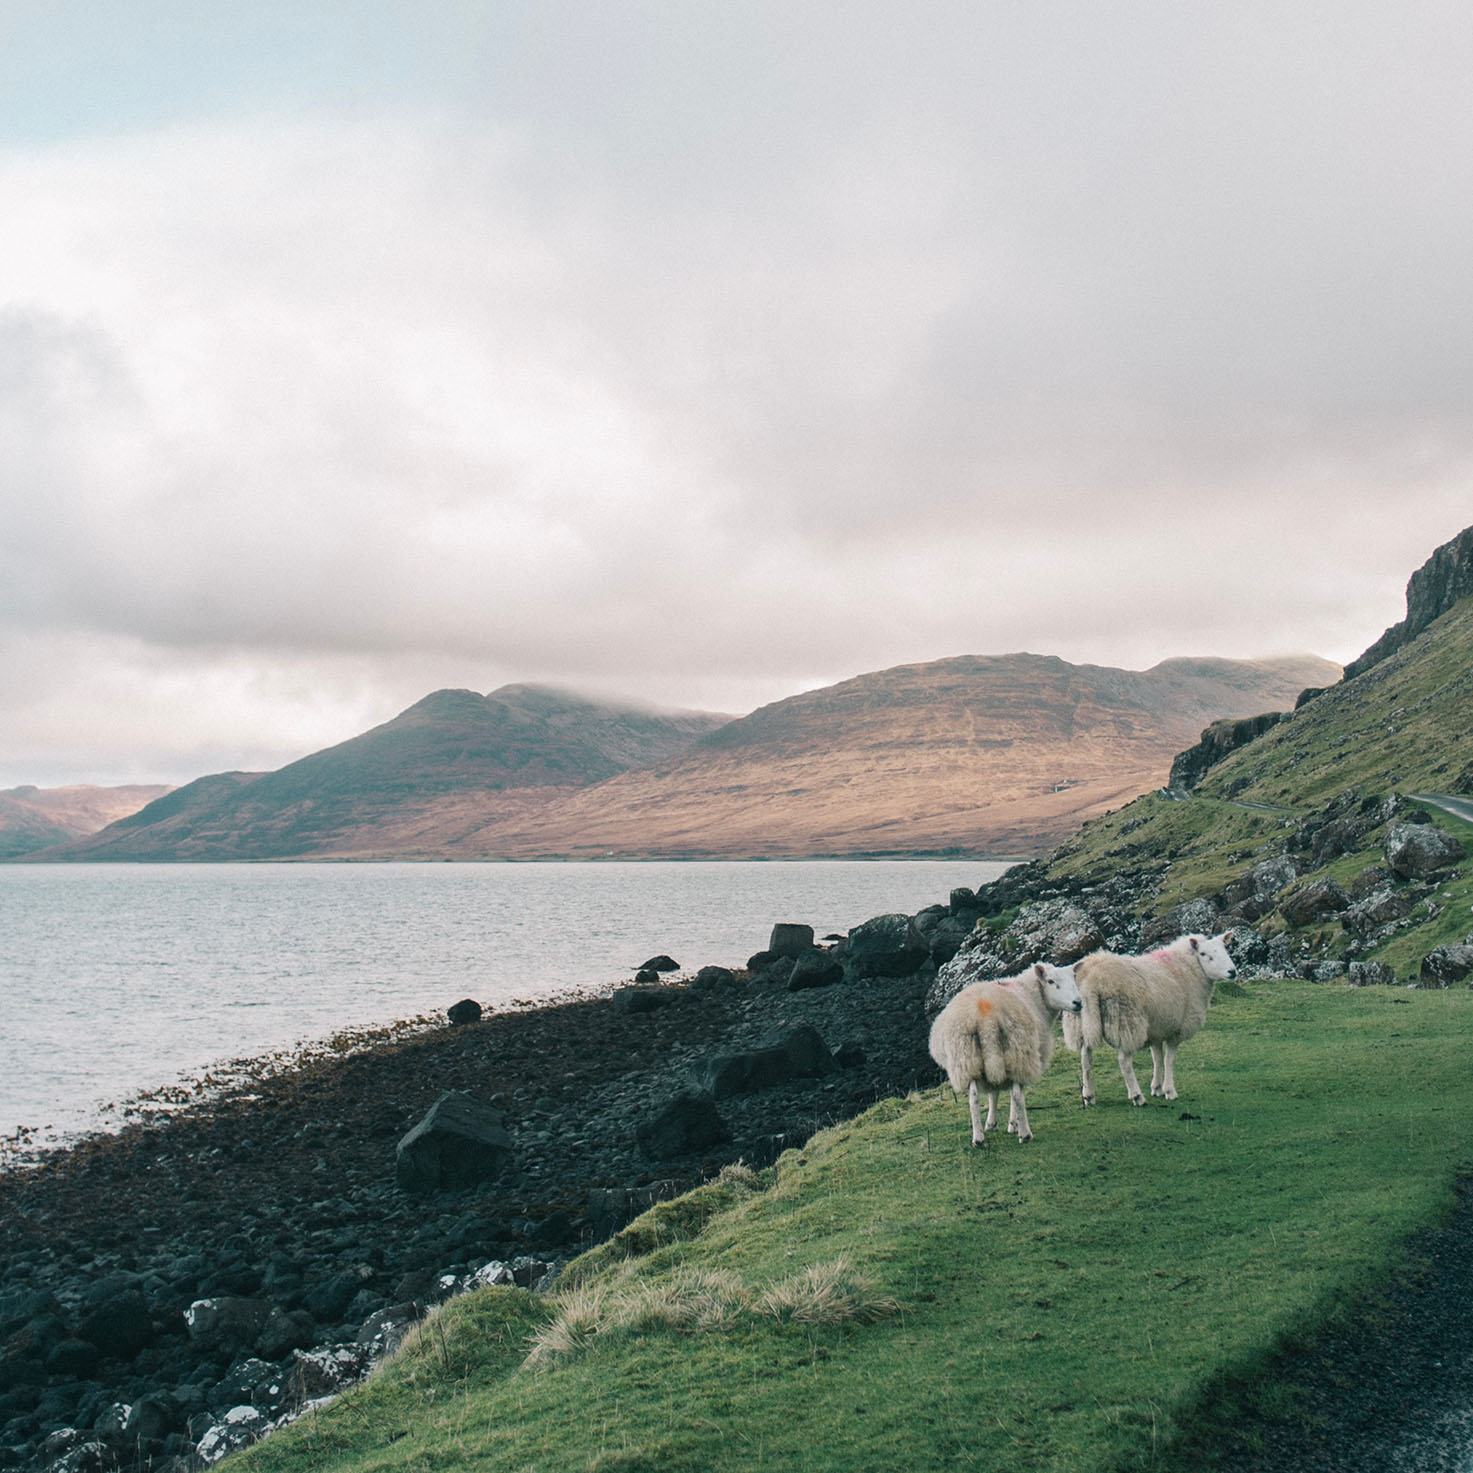 Sheep roaming near the water